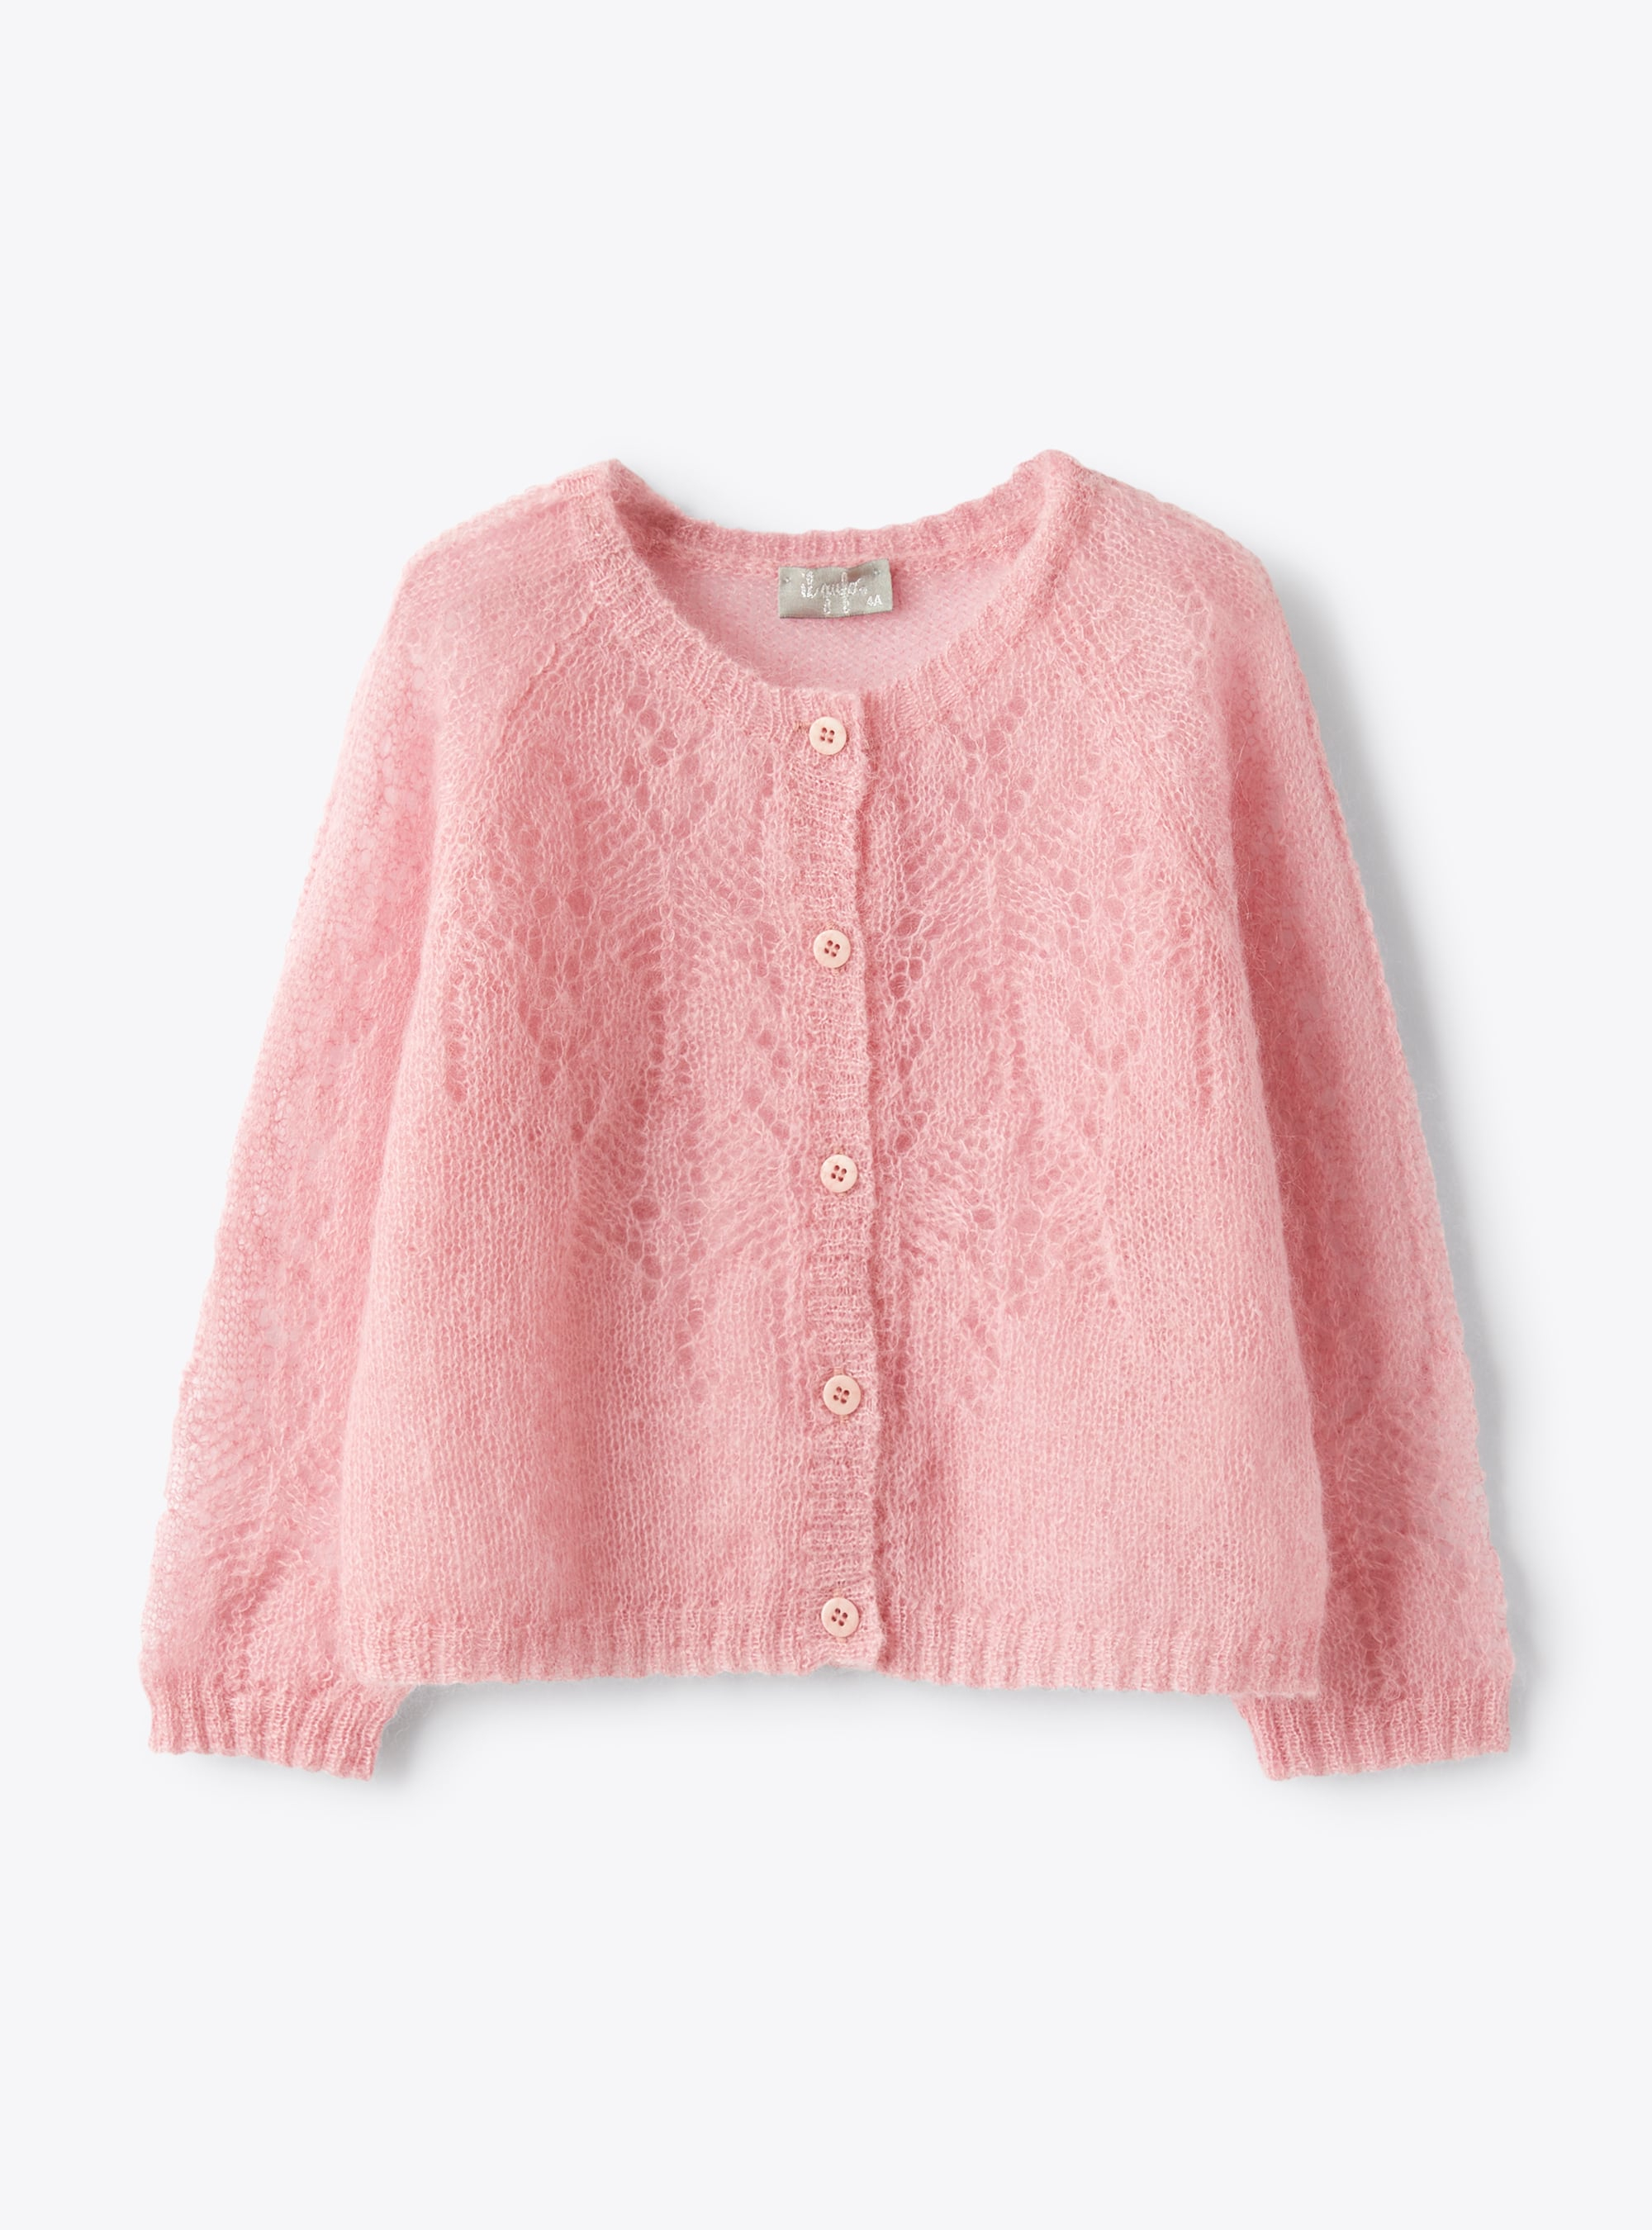 Cardigan in pink kid mohair - Sweaters - Il Gufo